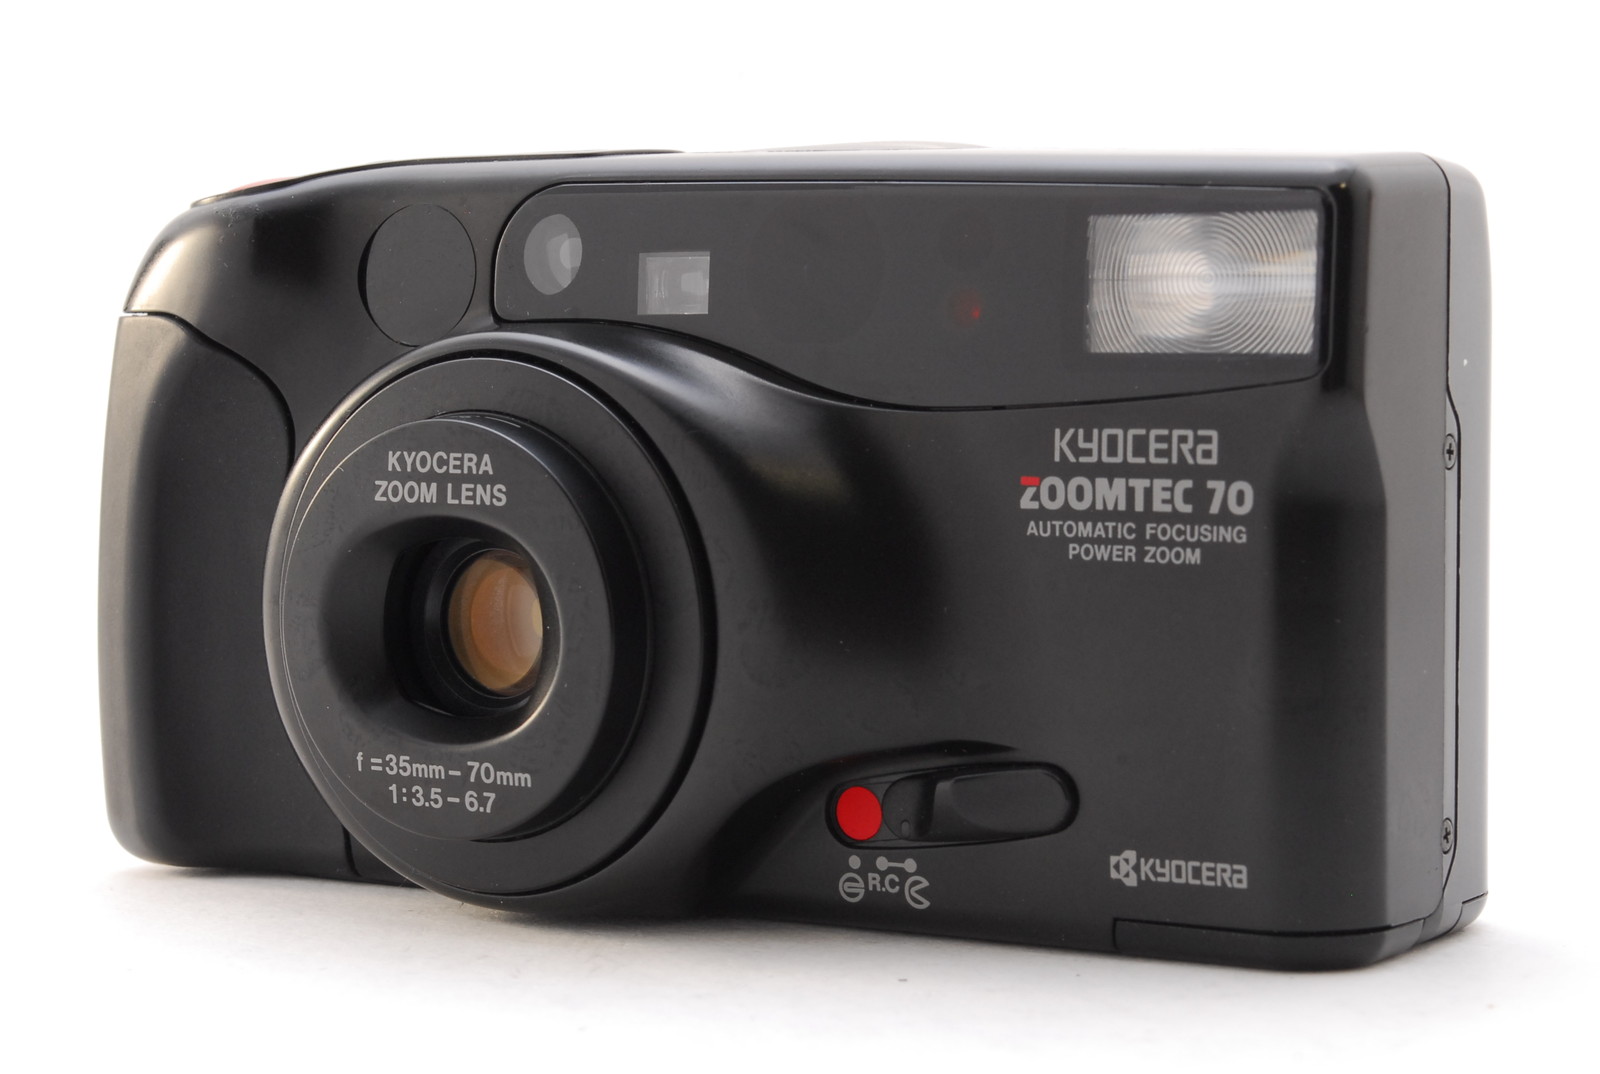 PROMOTION. NEAR MINT Kyocera Zoomtec 70 35mm Film Point&Shoot Camera 35-70mm f/3.5-6.7 from Japan